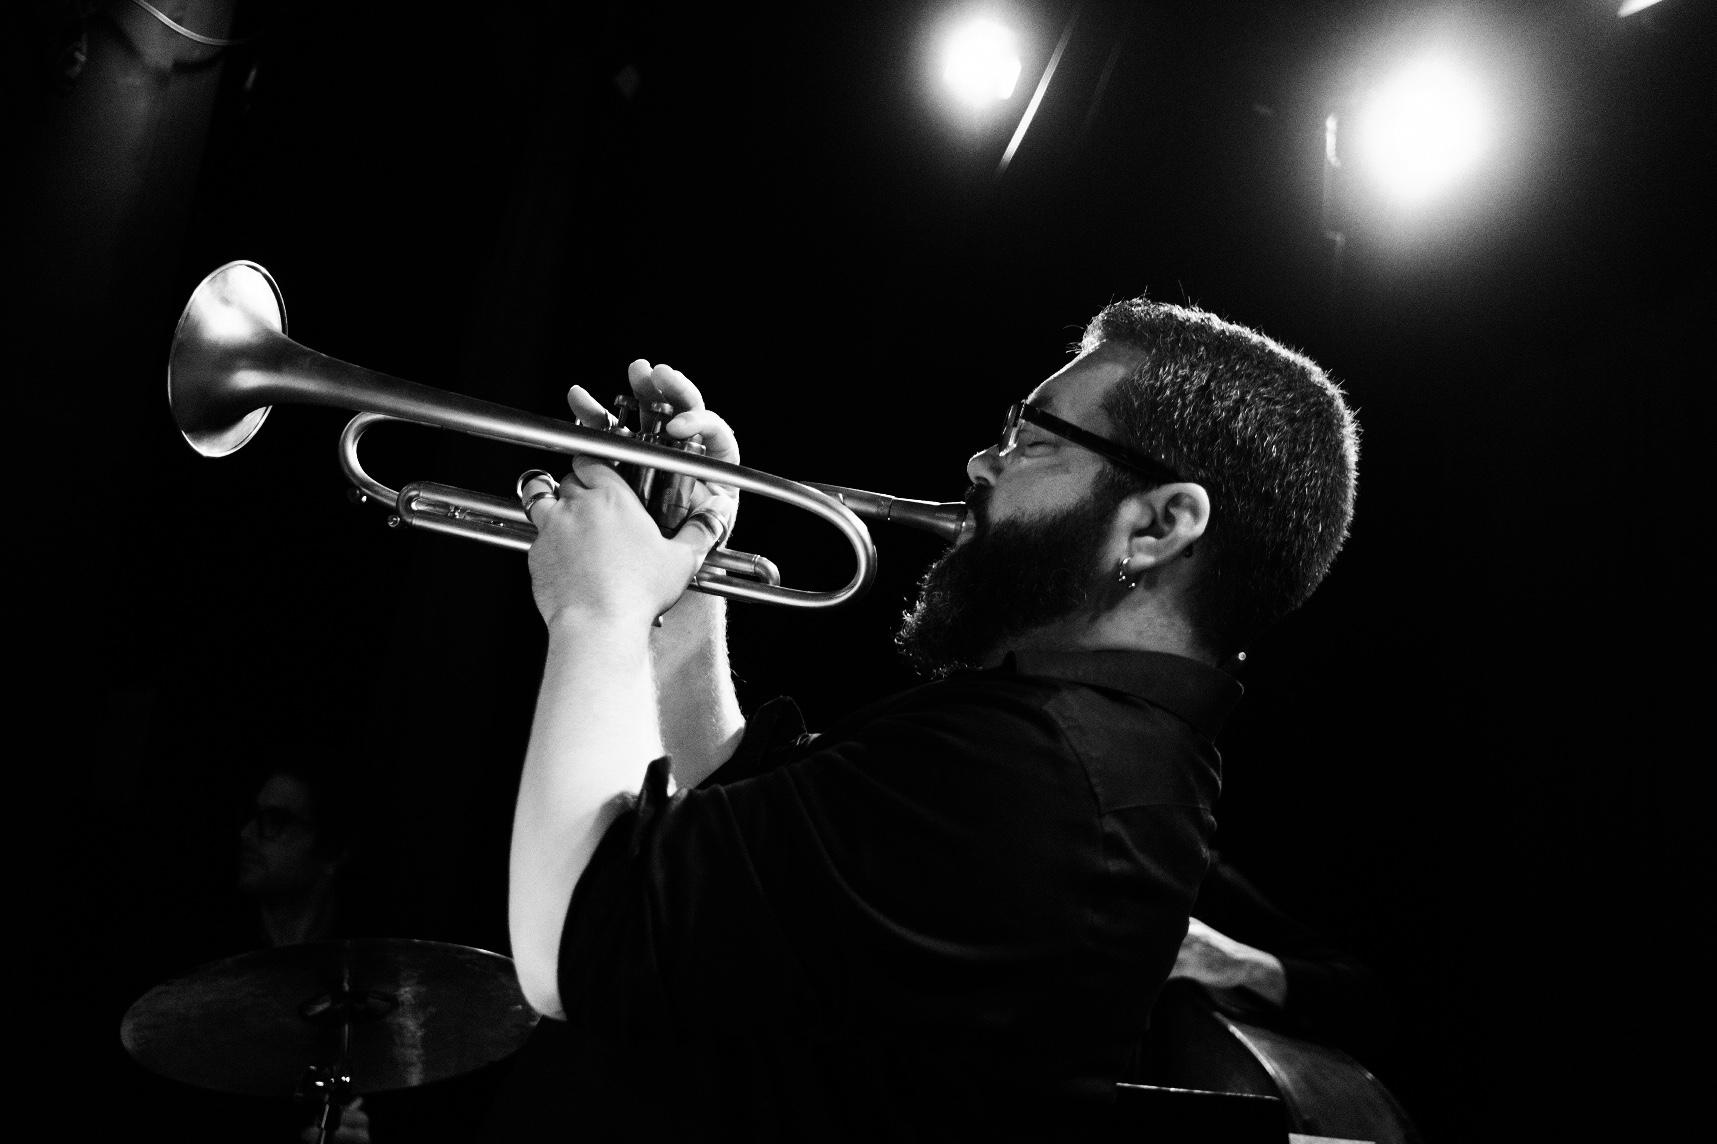 Josh Reed to University of Nevada-Reno - The International Trumpet Guild